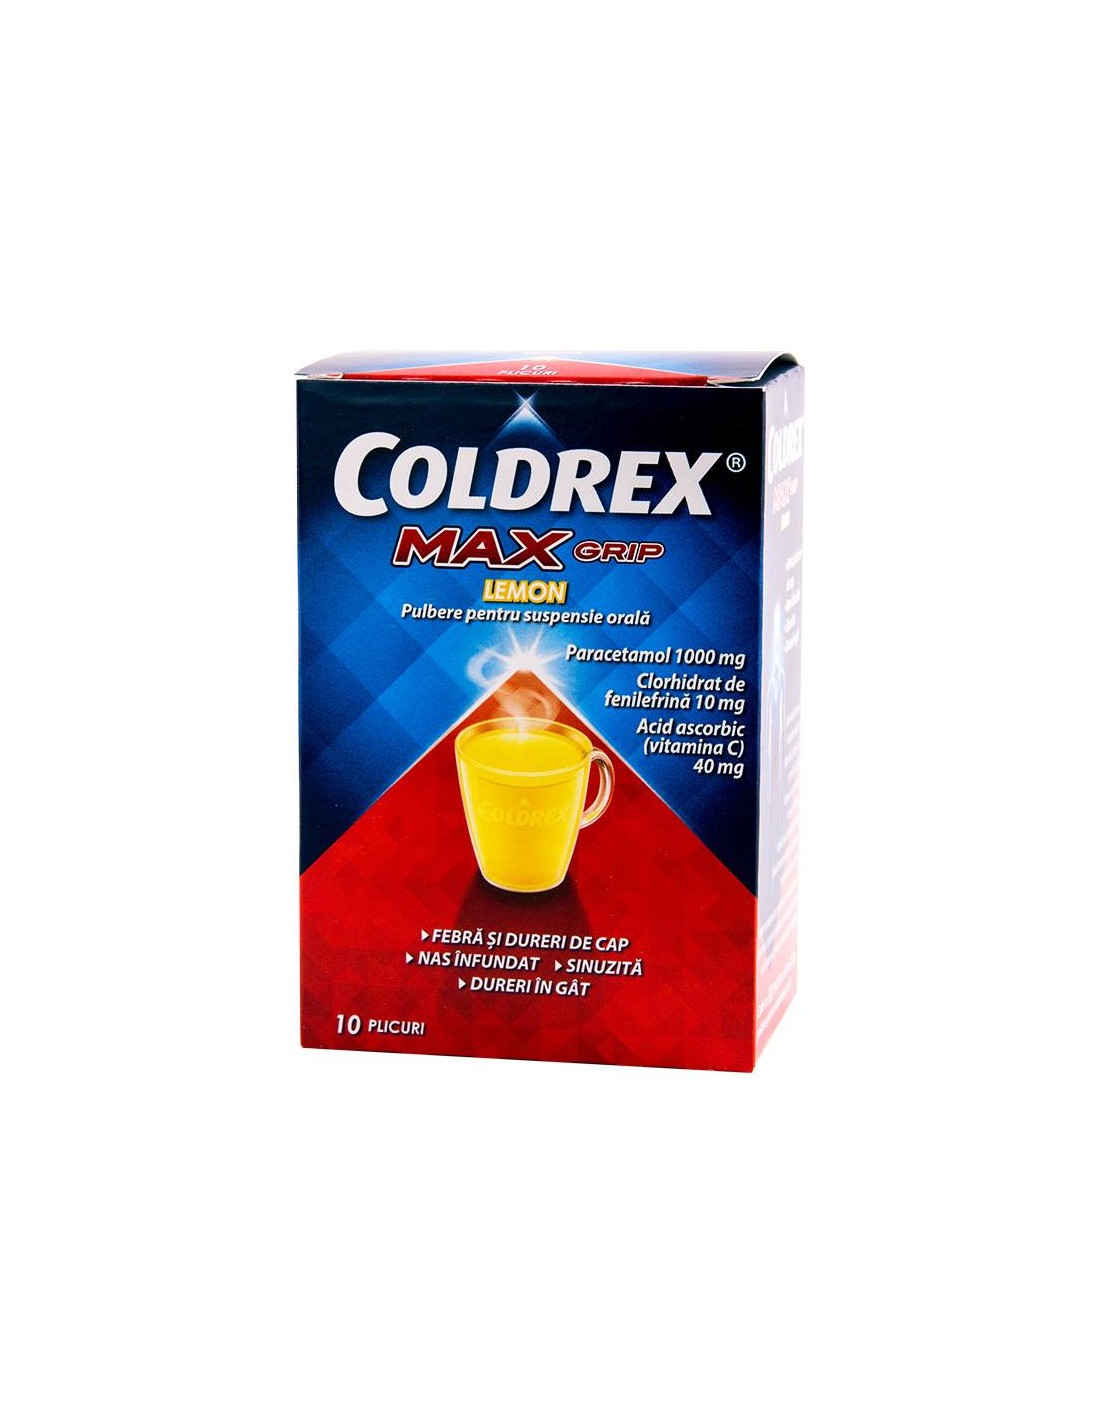 Coldrex Maxgrip Lemon, 10 plicuri, Gsk - RACEALA-GRIPA - GSK SRL OMEGA  PHARMA